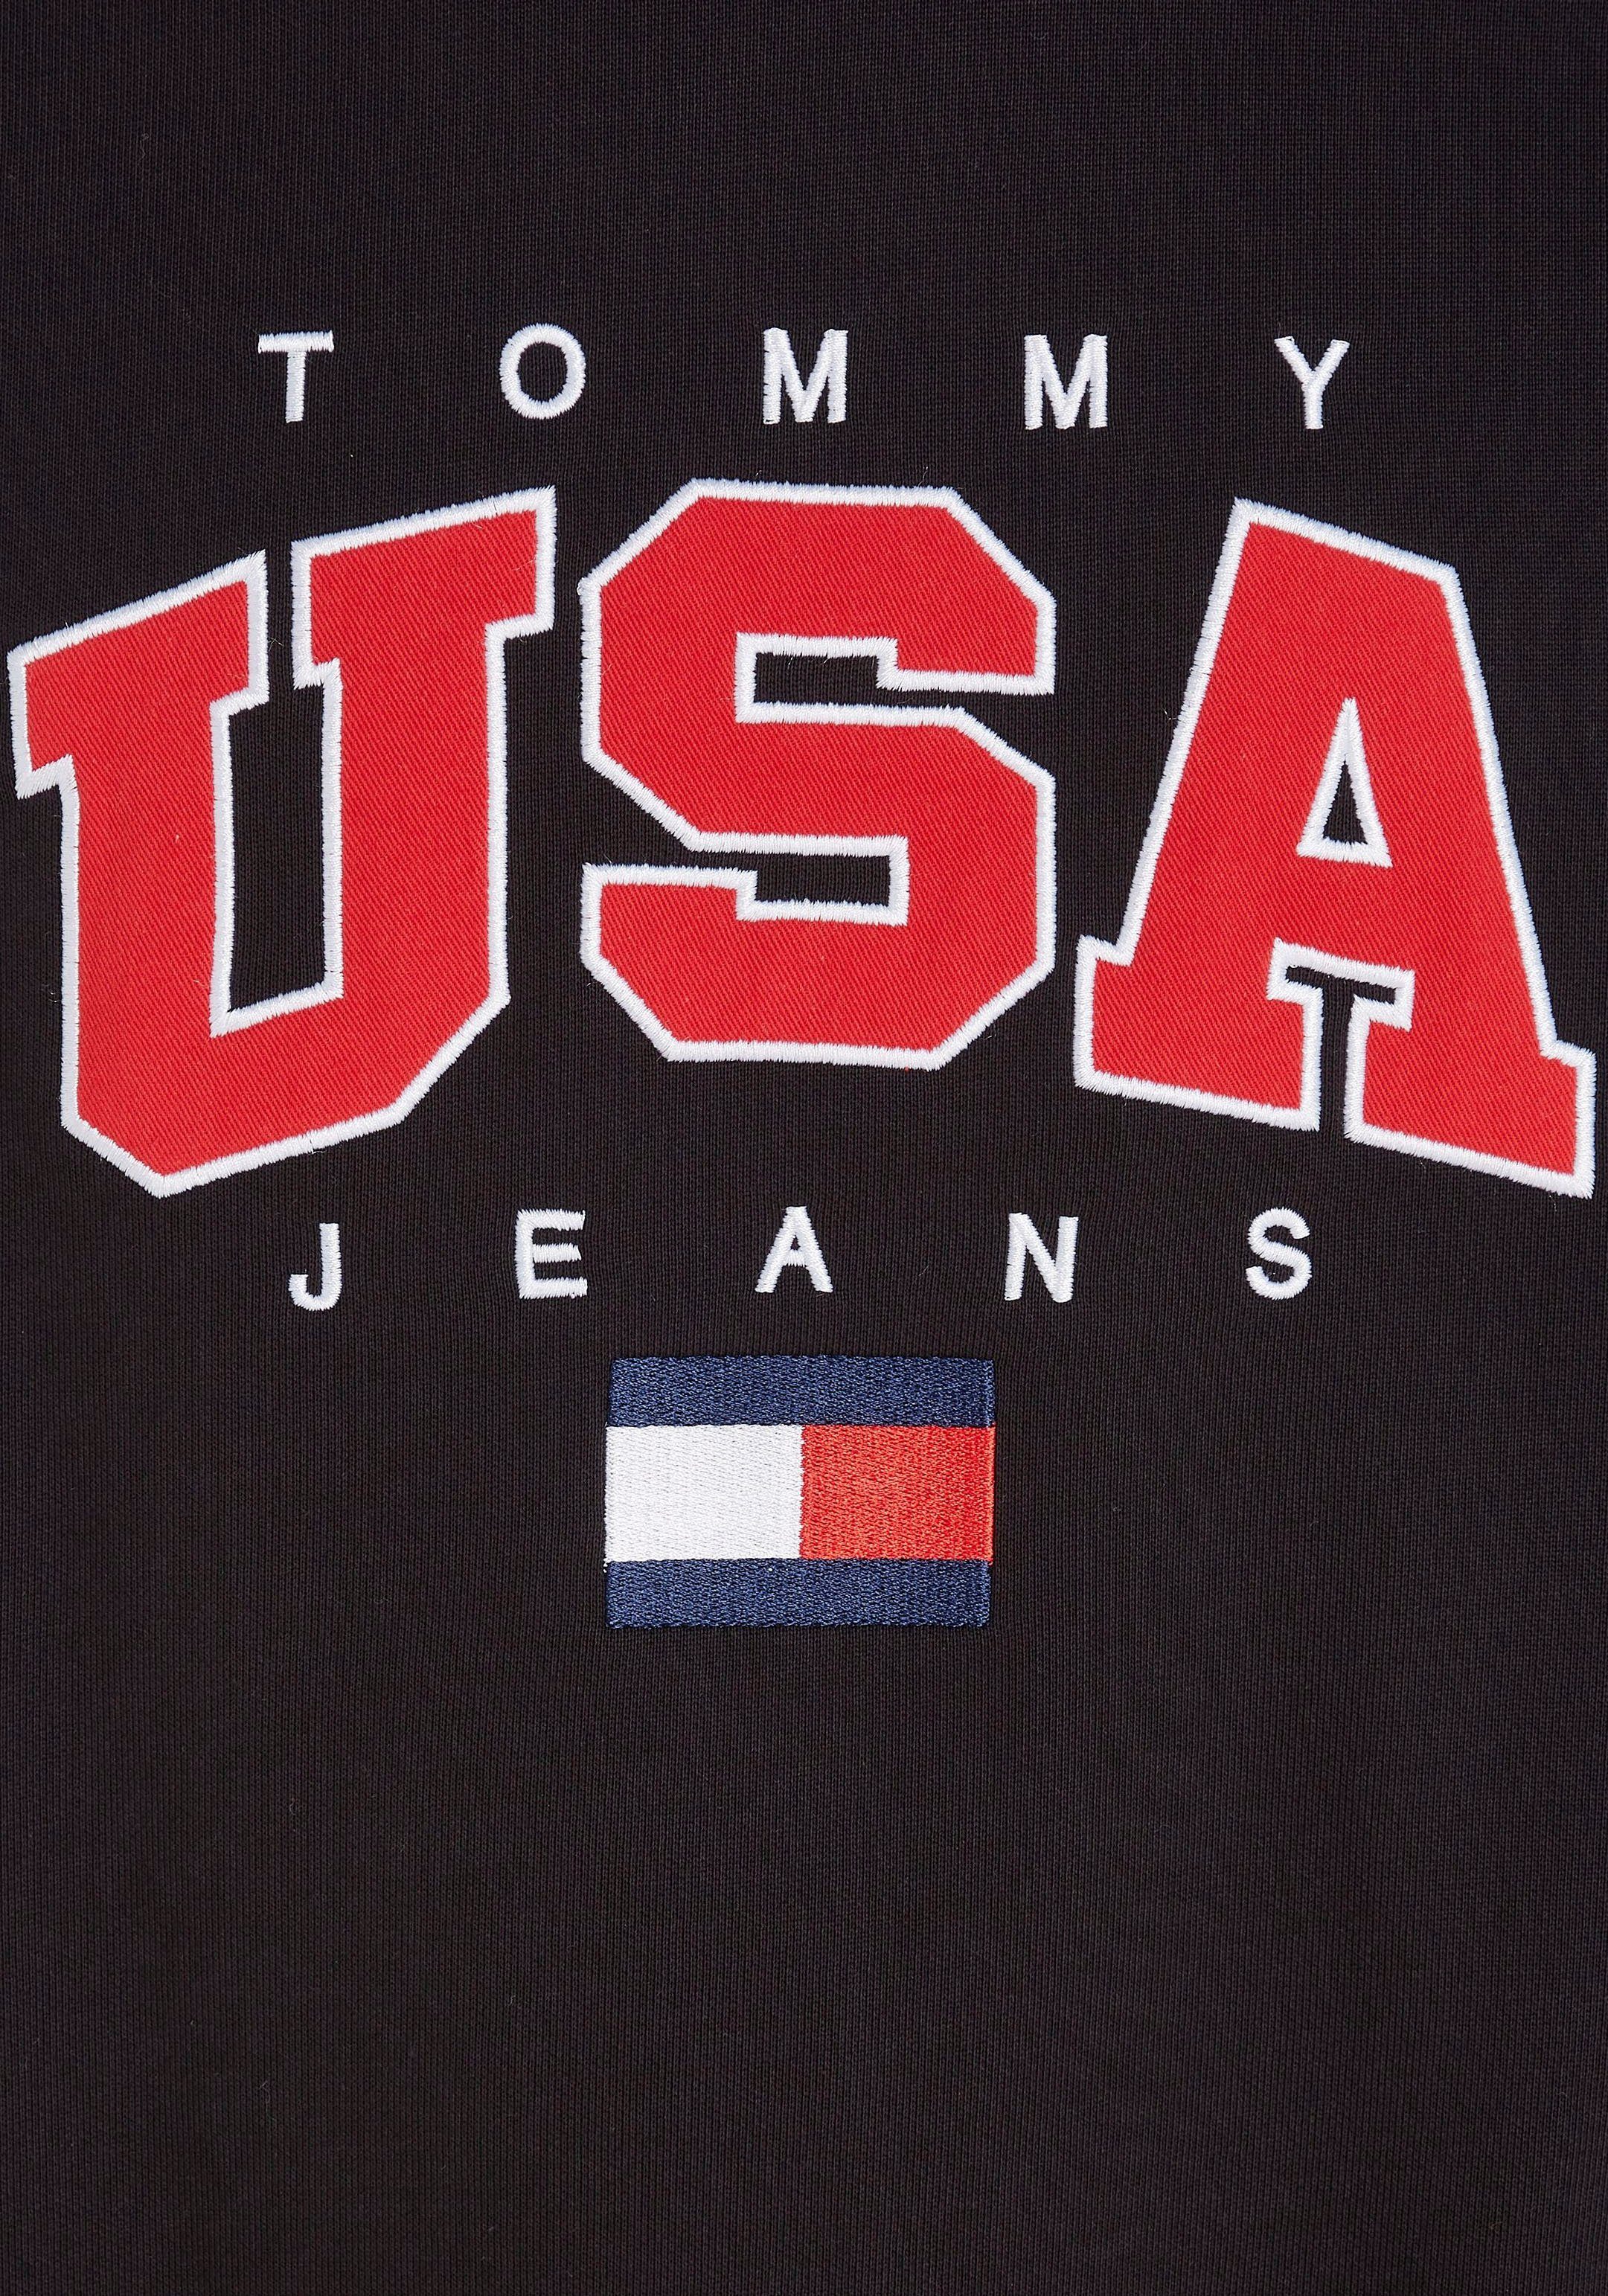 großflächiger Sweatshirt Black CREW Tommy BOXY Logostickerei mit MODERN TJM SPORT Jeans USA